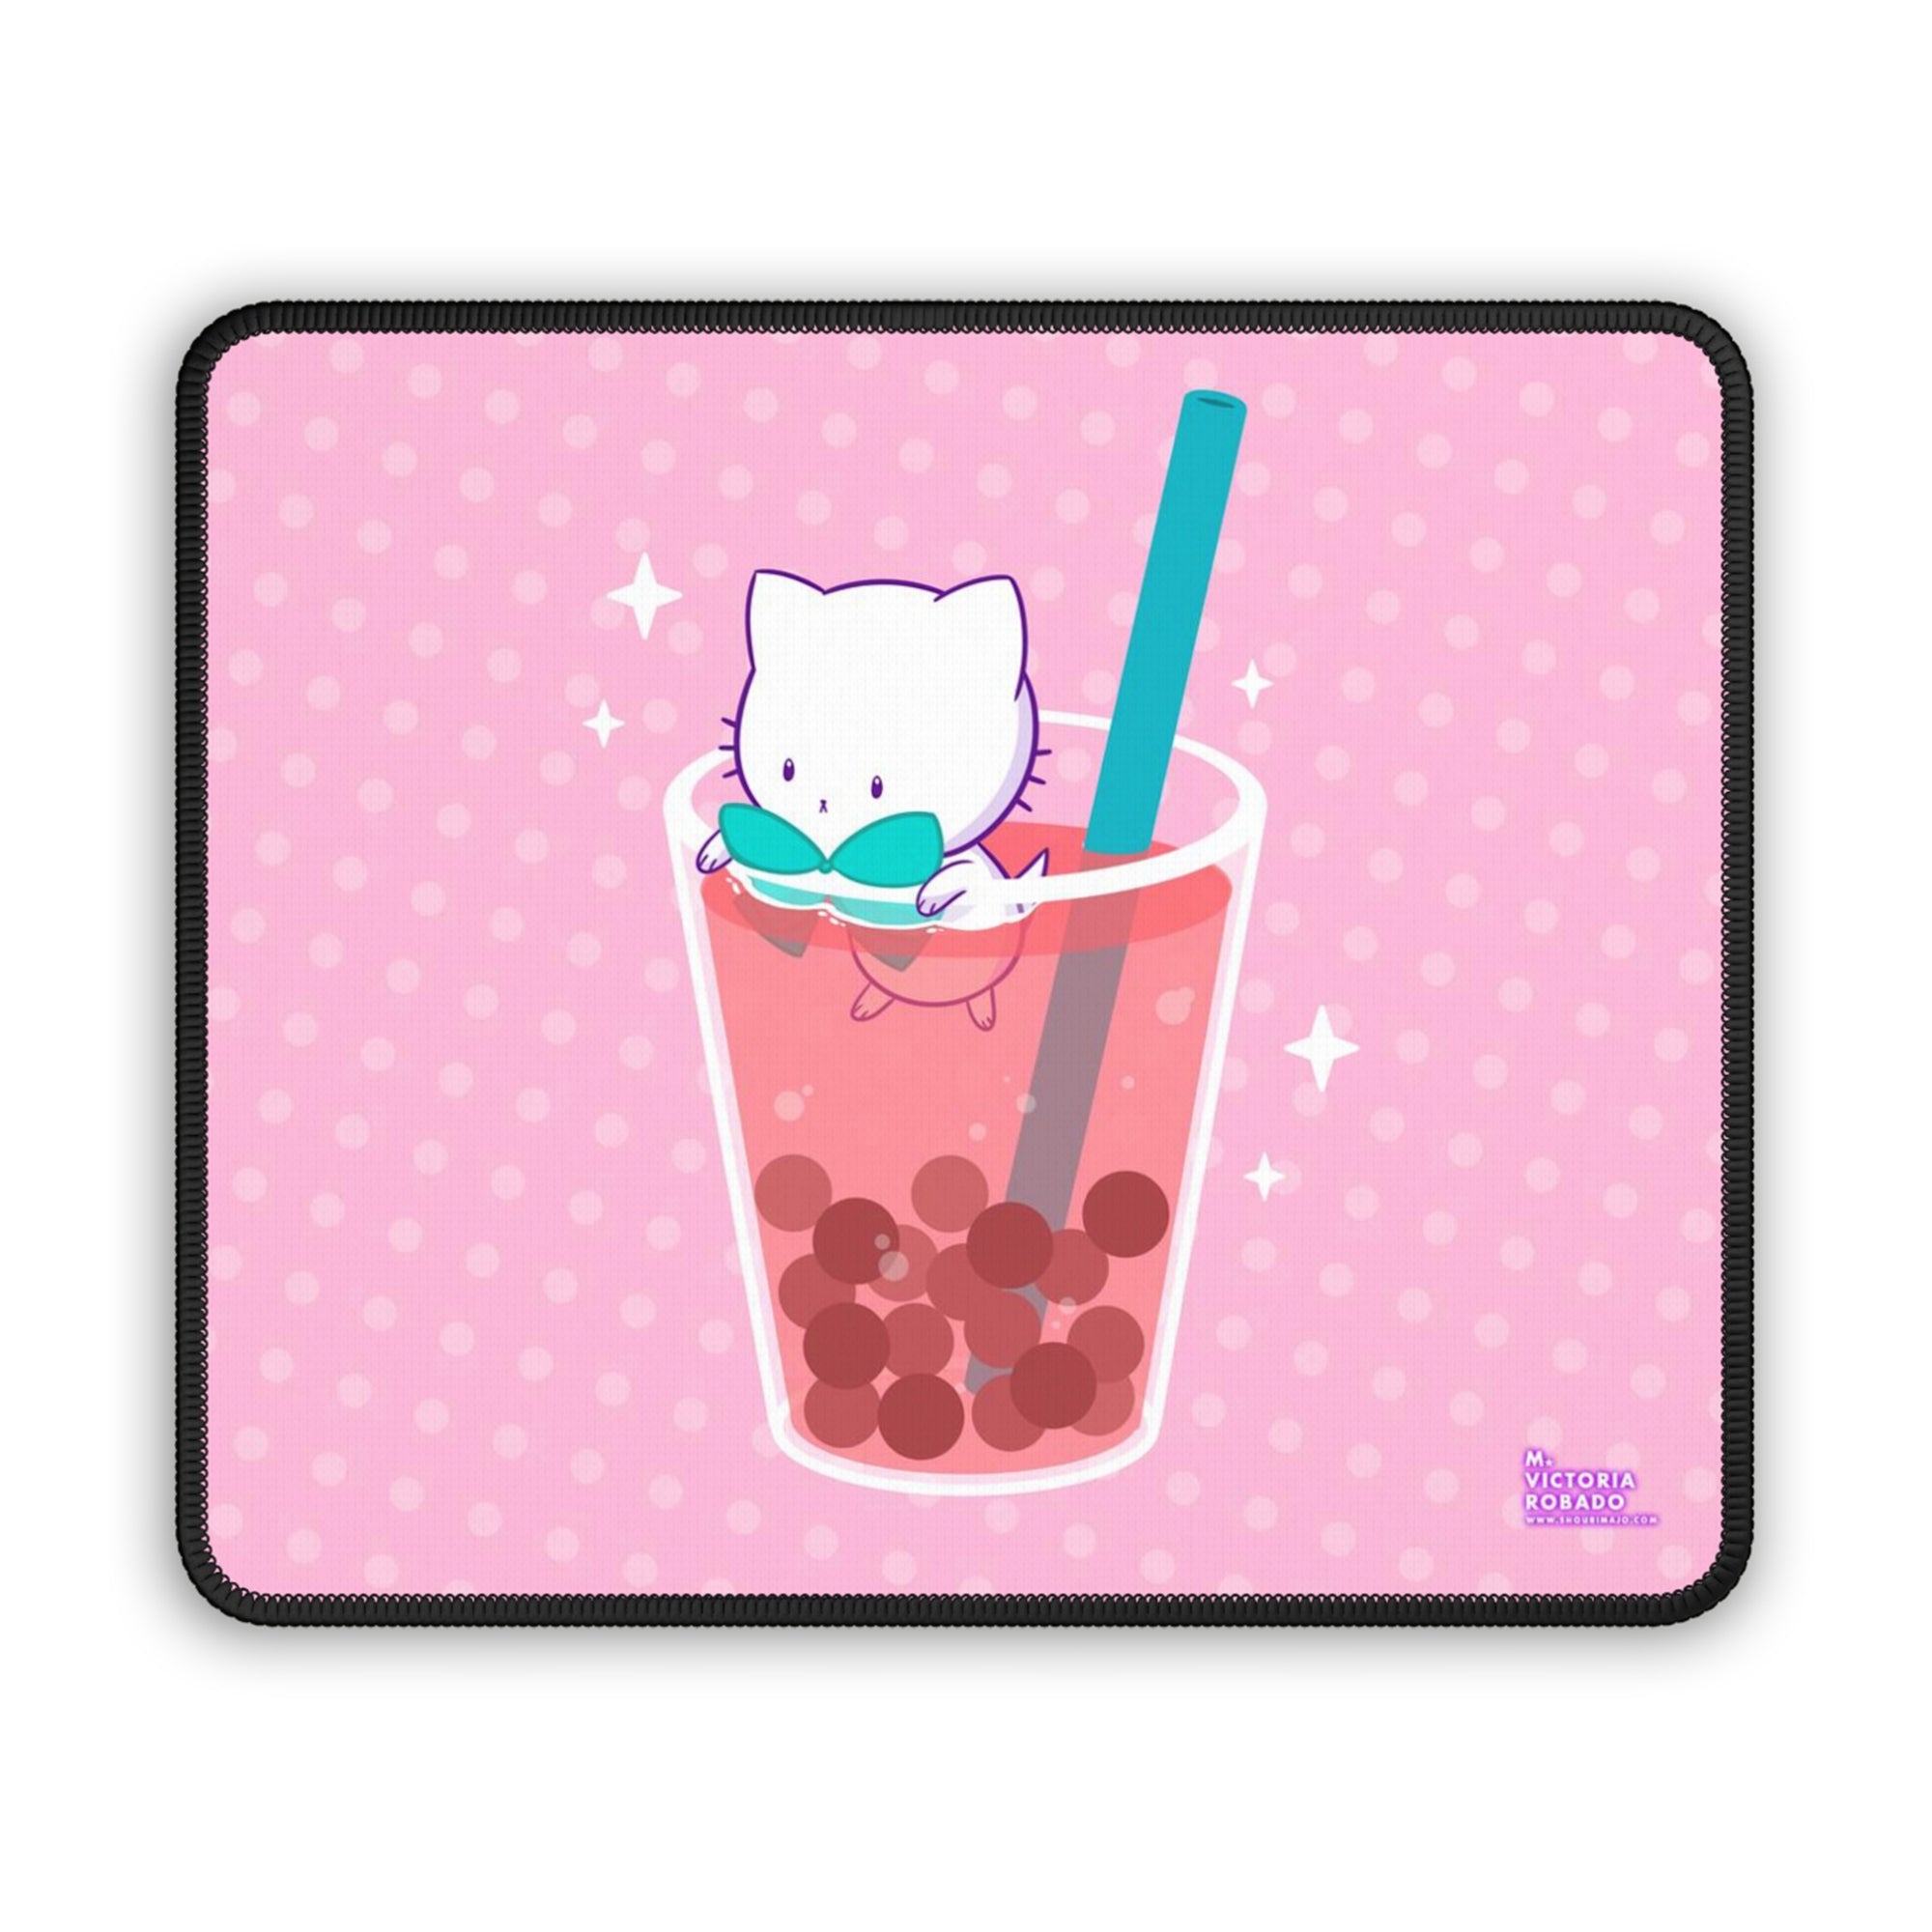 Bubble Kittea in a Cup Mousepad